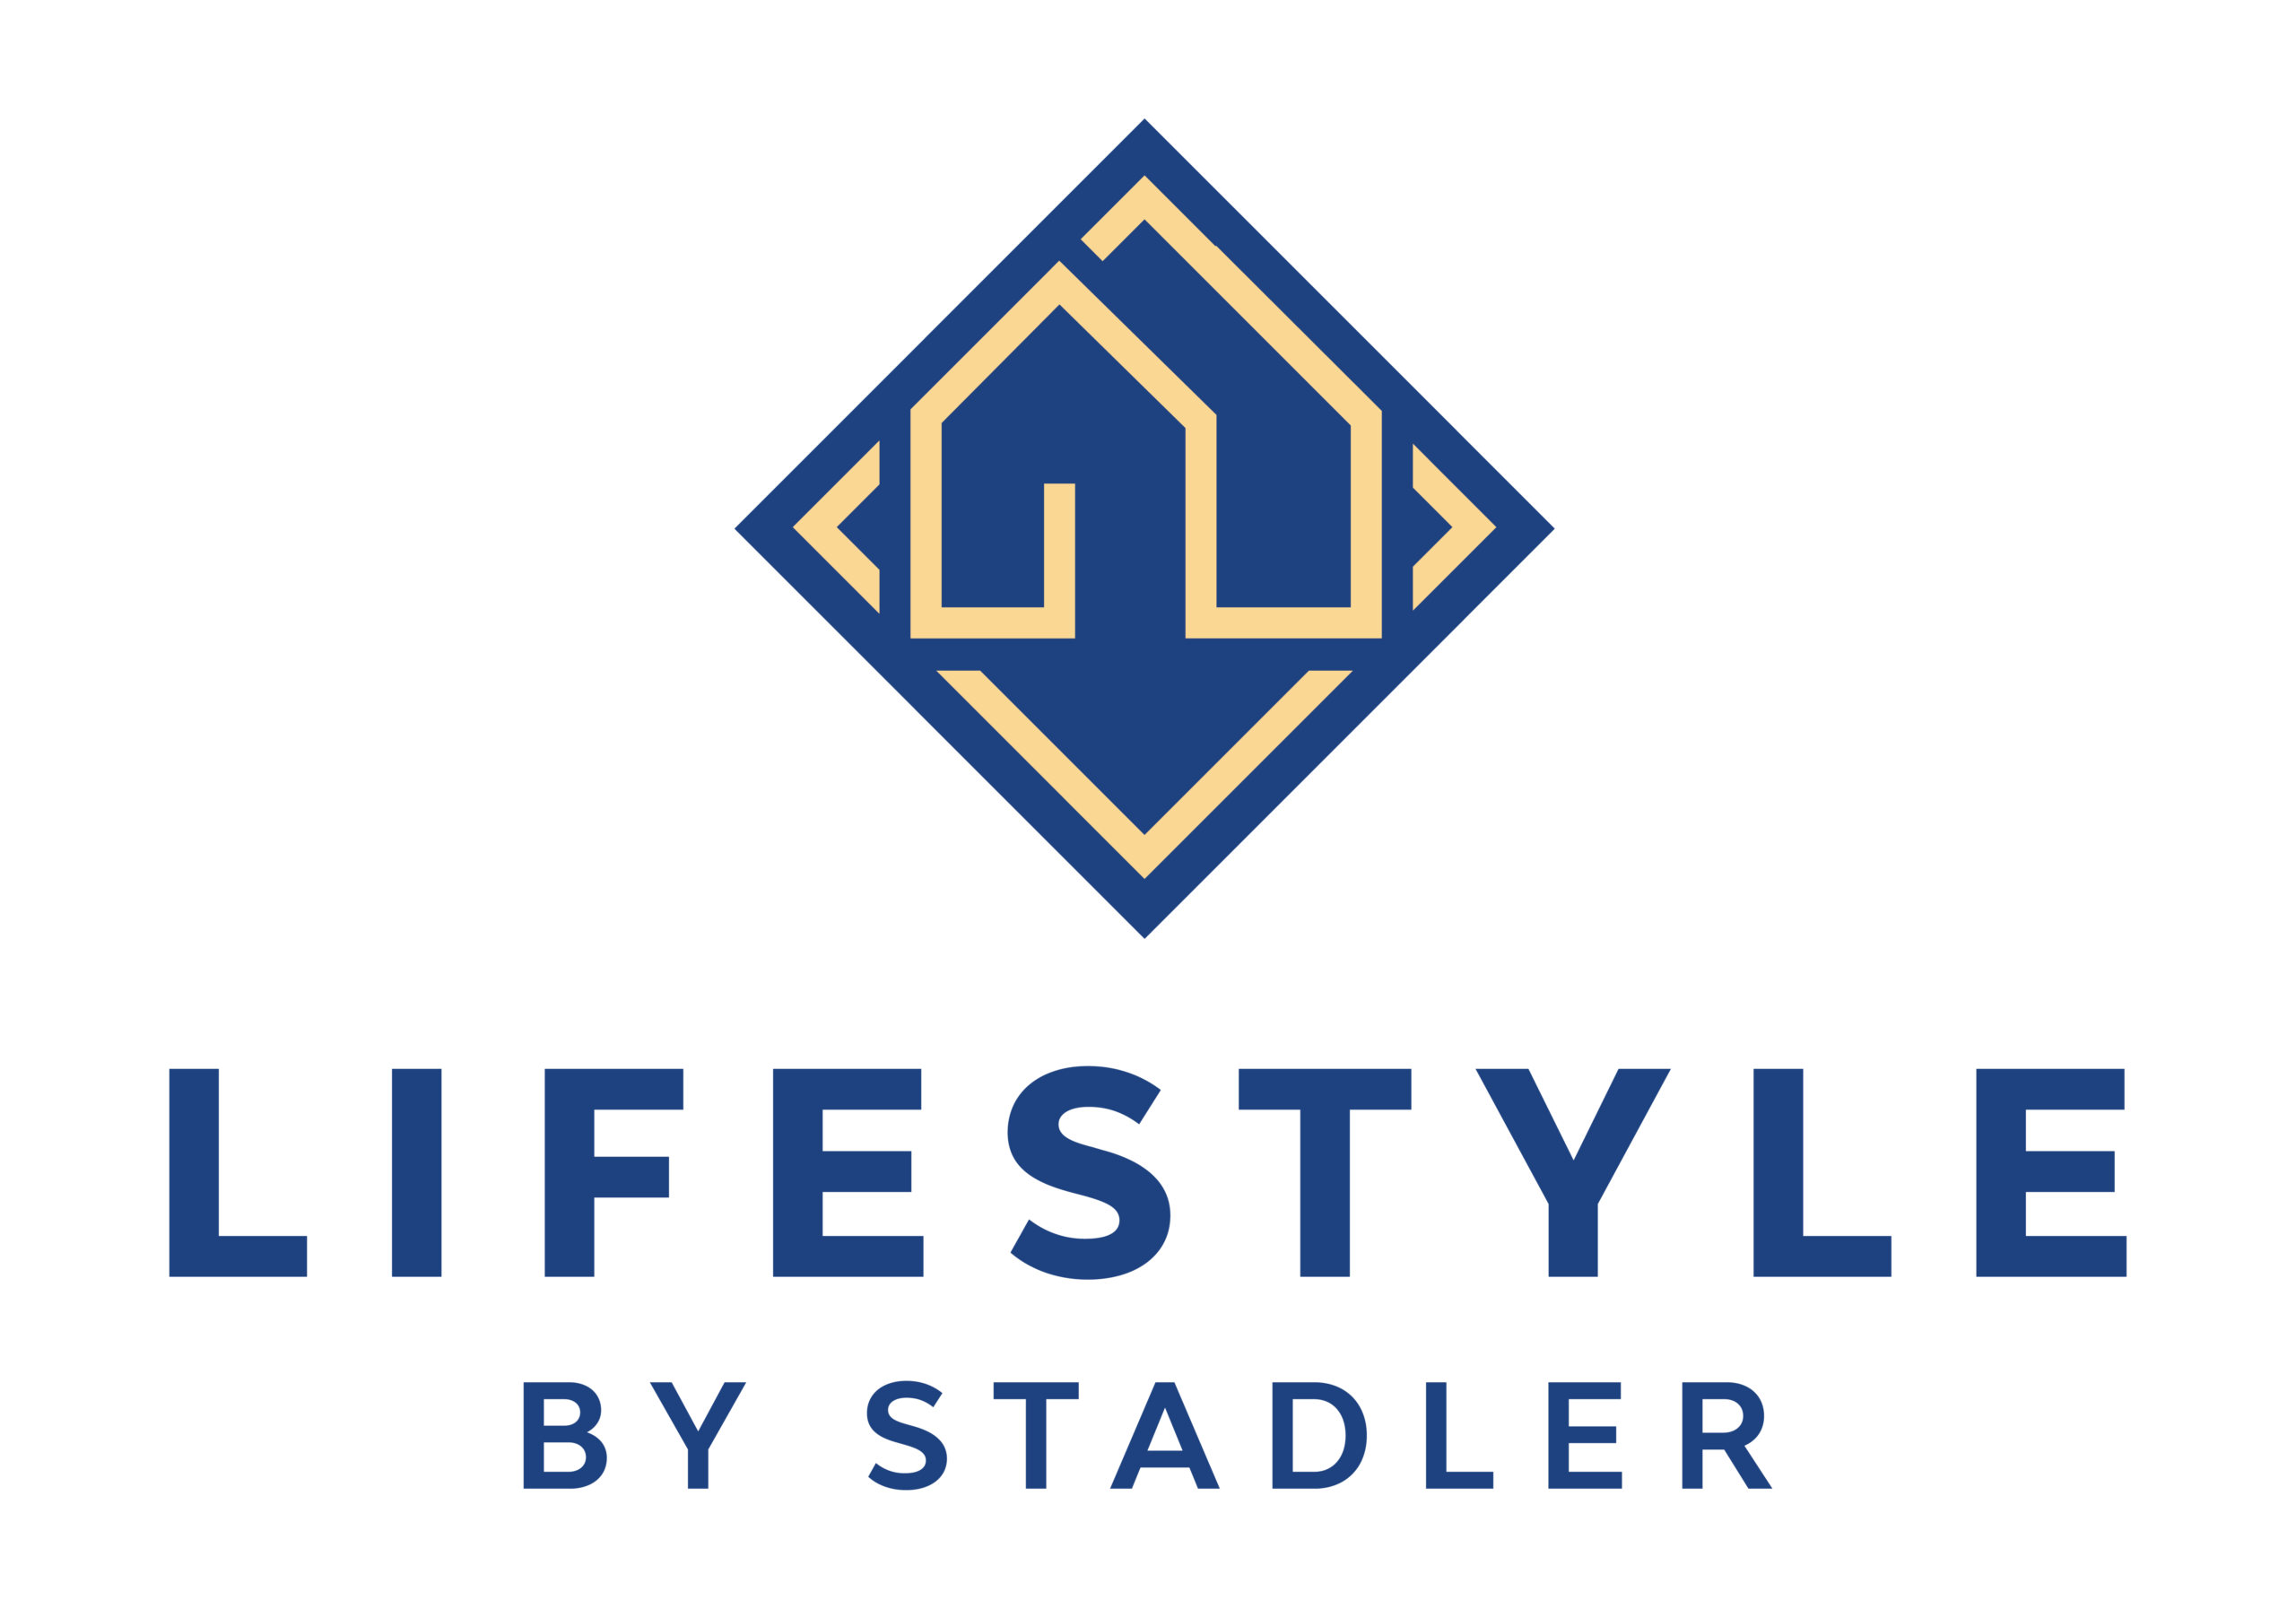 Lifestyle by Stadler